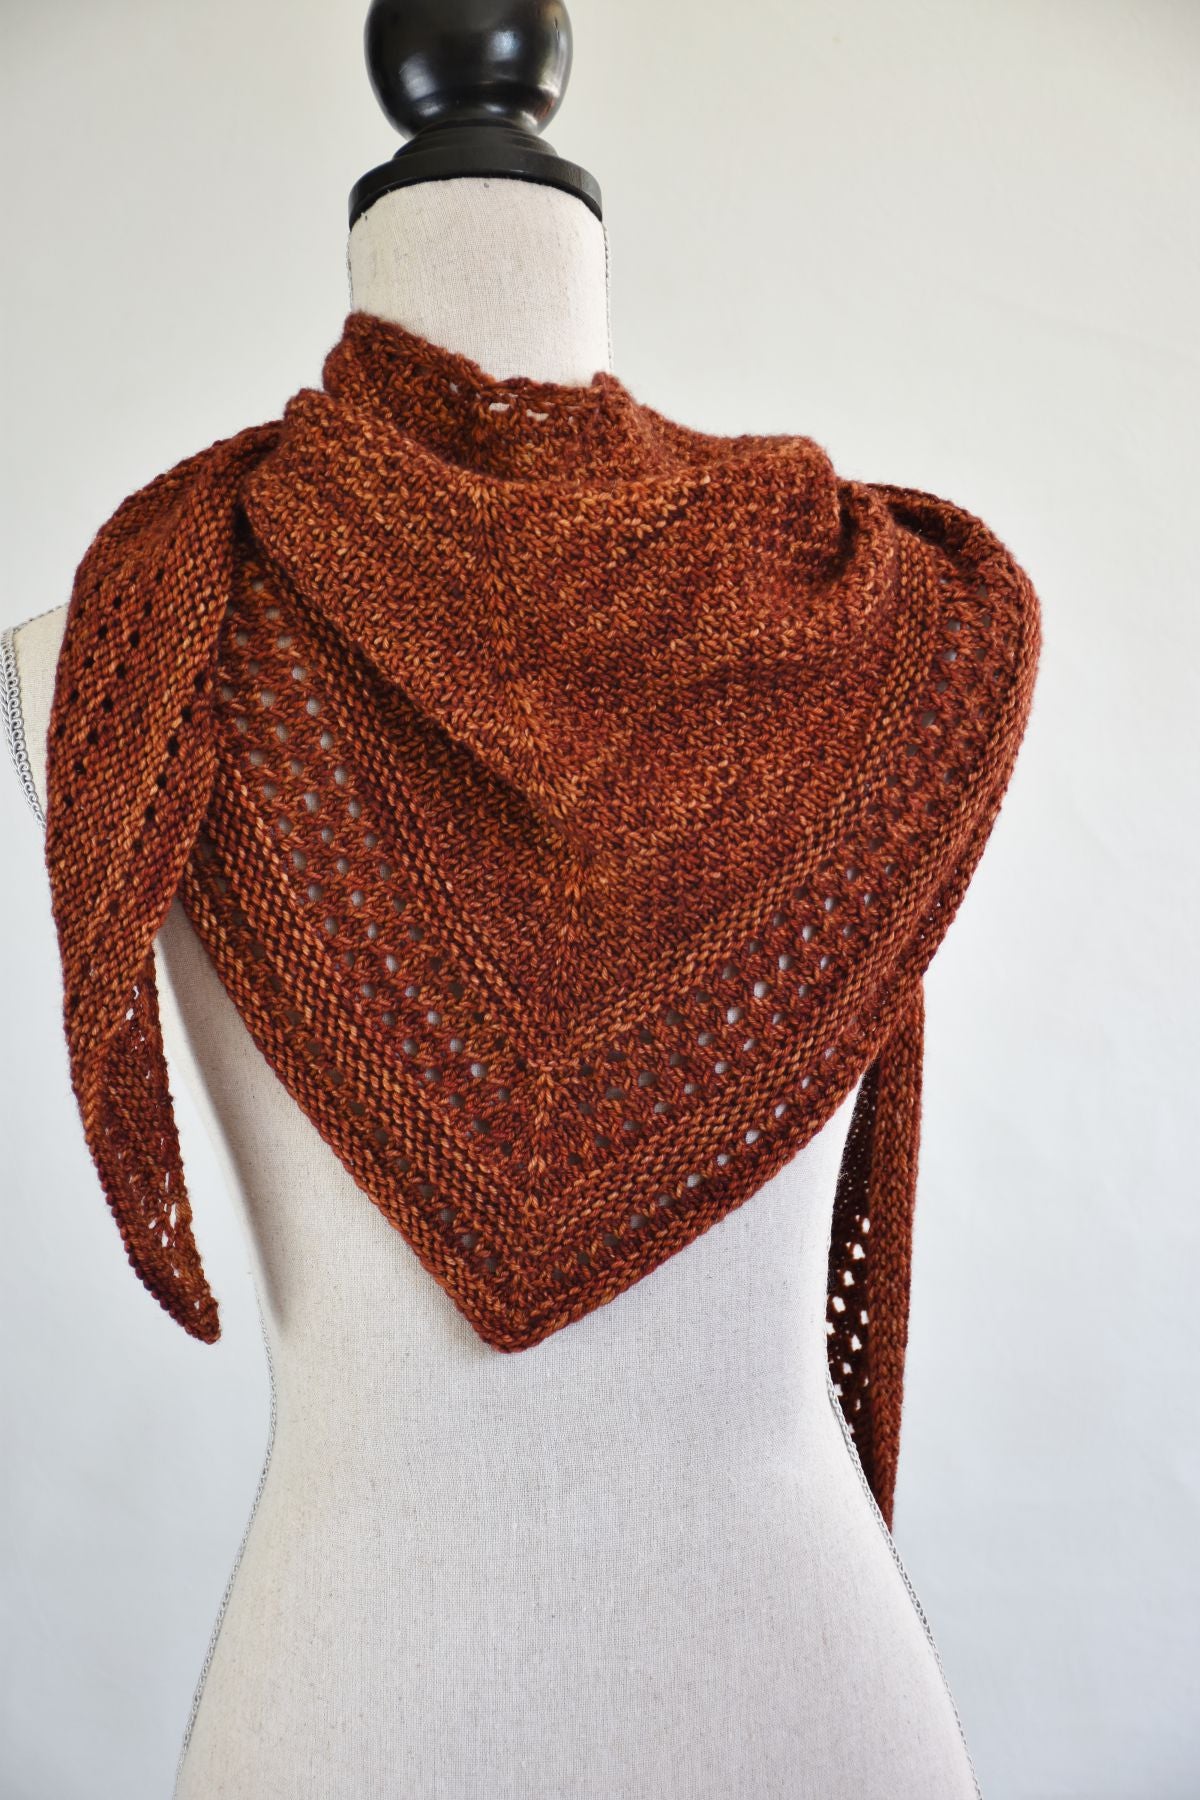 Triangle knitted shawl pattern